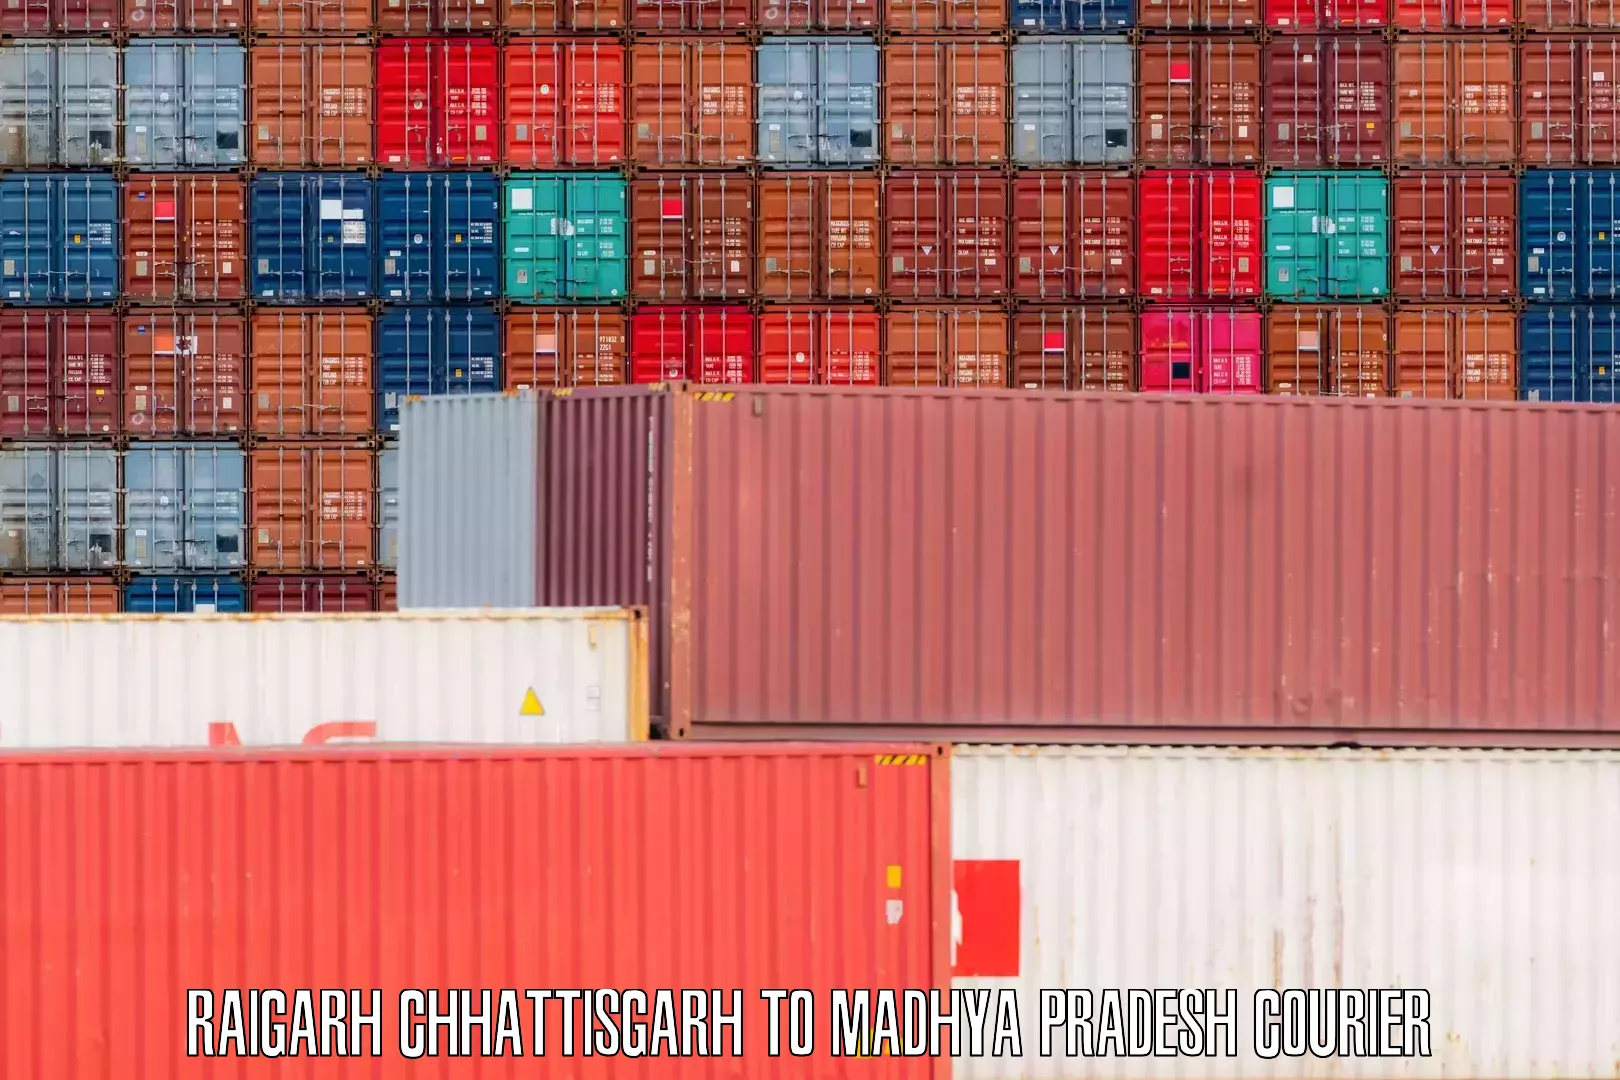 Personal effects shipping in Raigarh Chhattisgarh to Madhya Pradesh